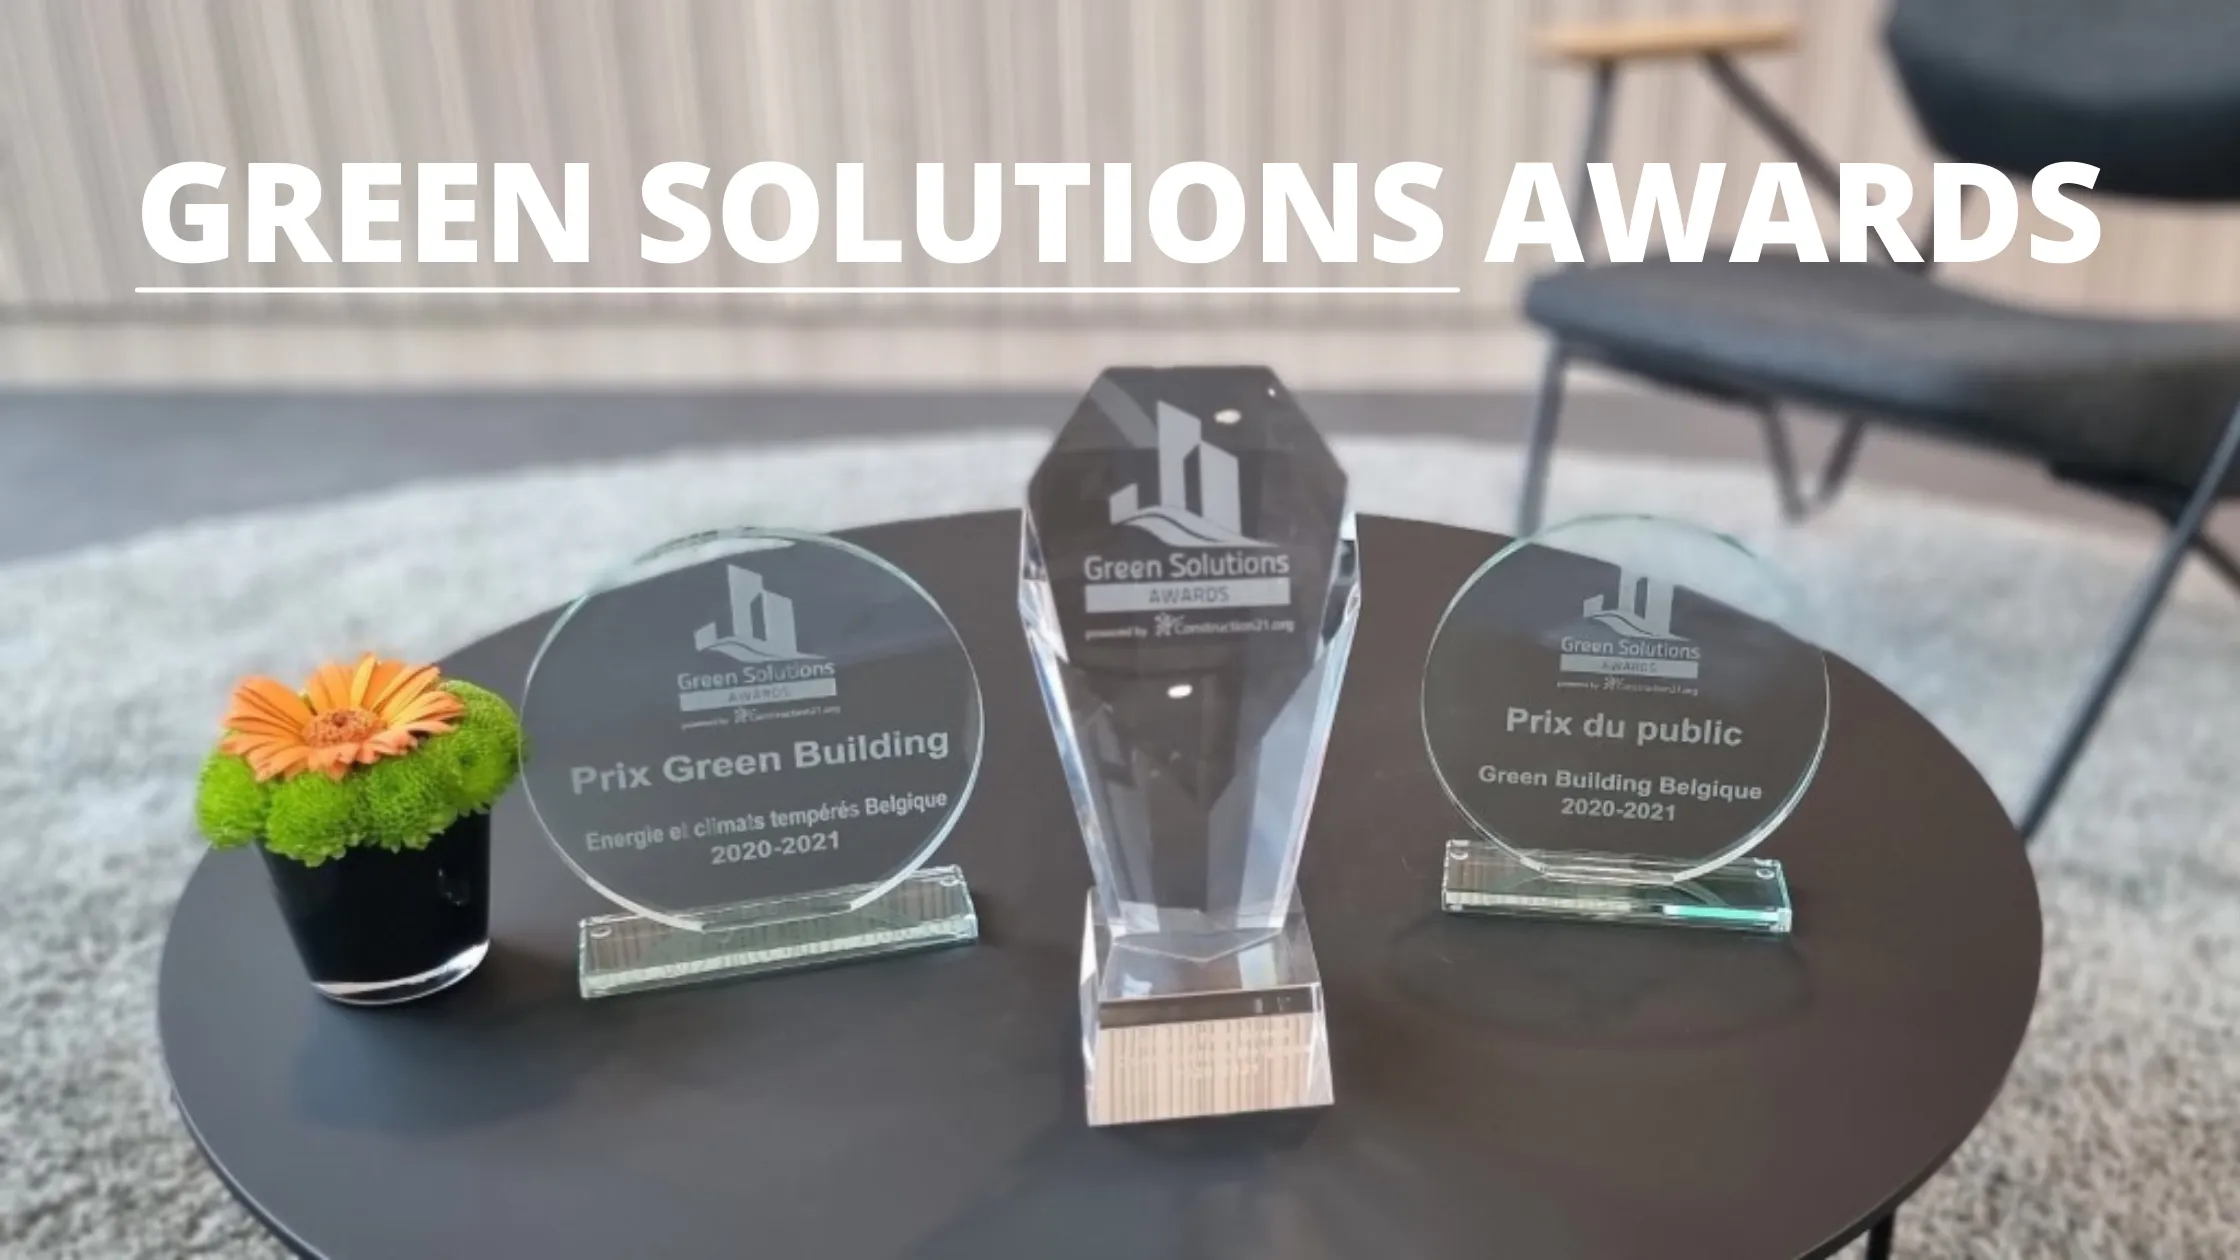 Thomas & Piron Bâtiment remporte 3 prix aux Green Solutions Awards ! 